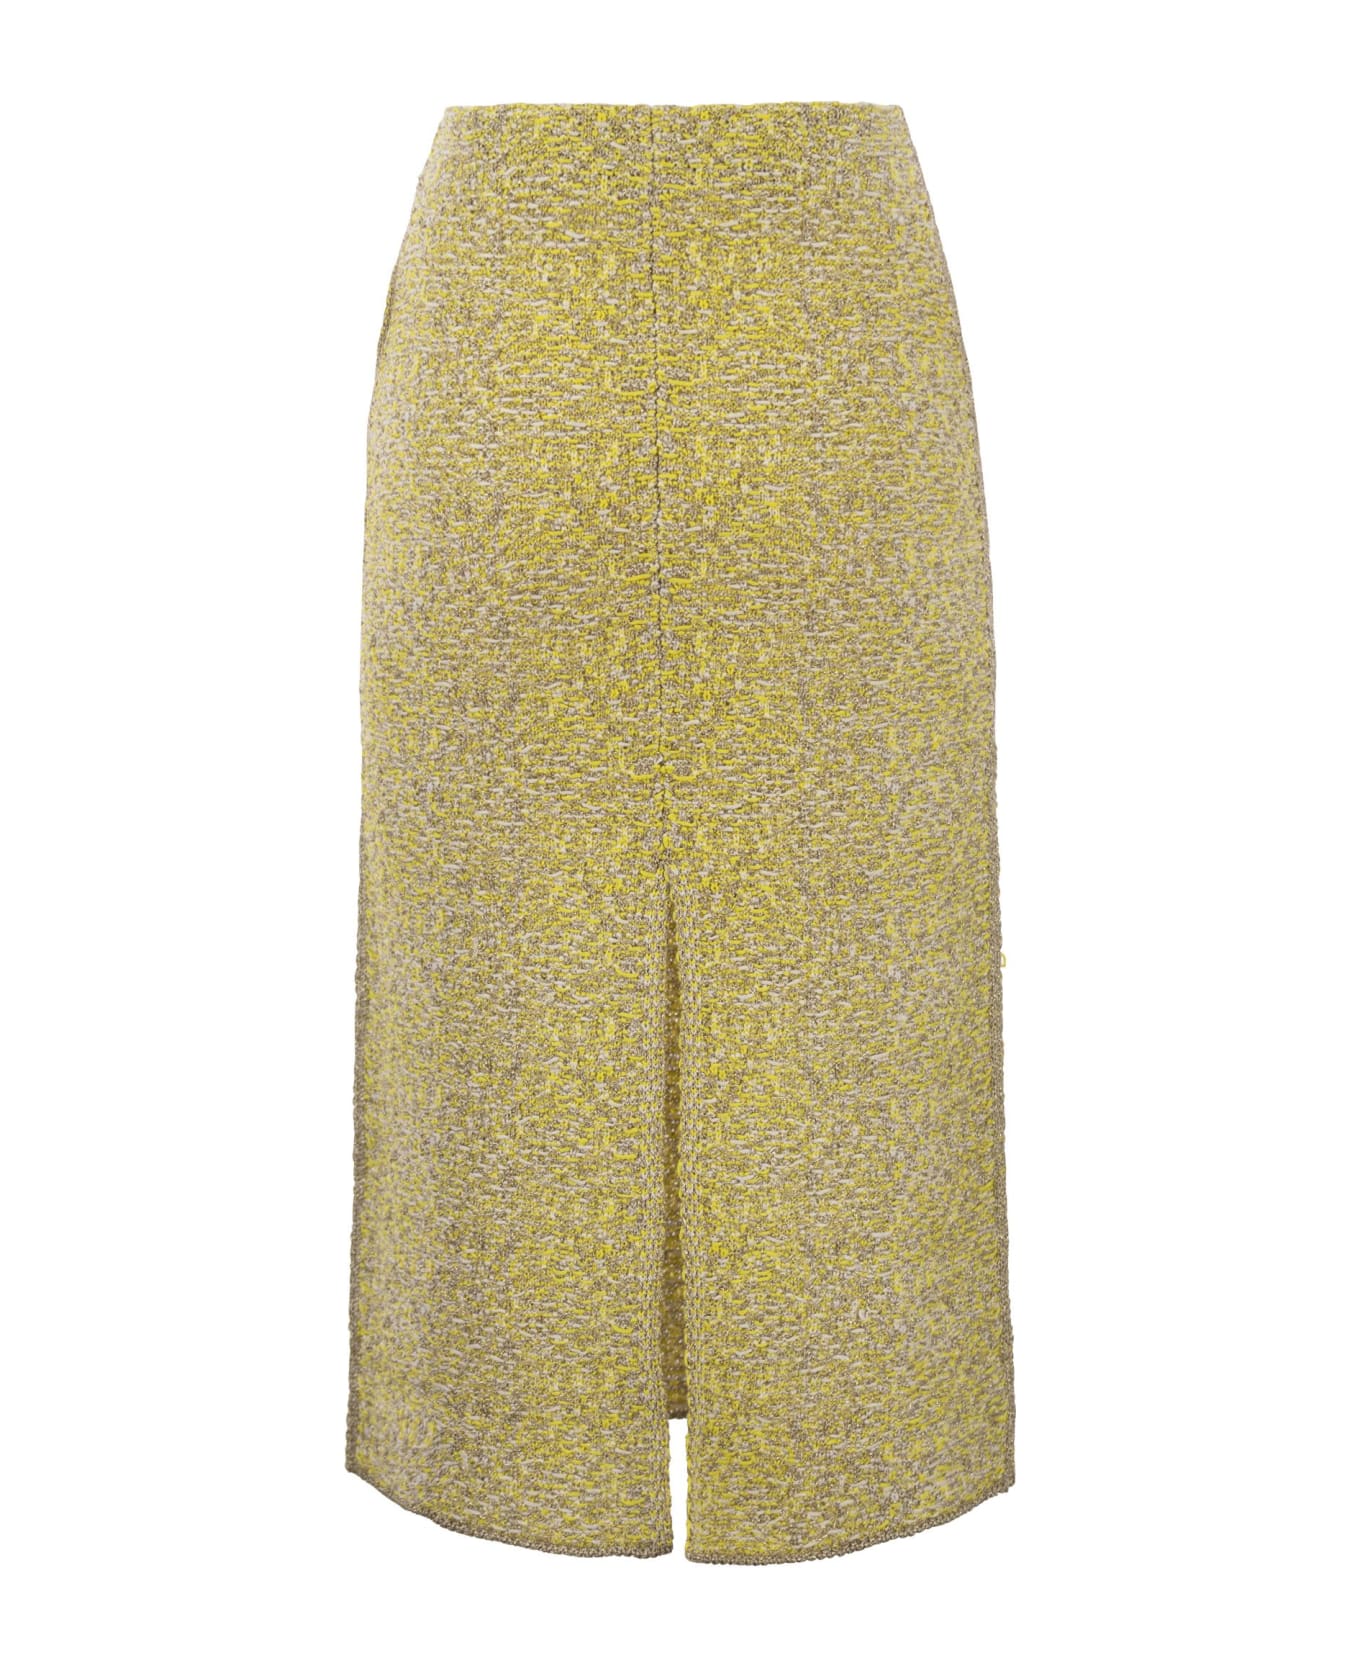 Fabiana Filippi Tweed Stitch Pencil Skirt - Bianco/sole/oro